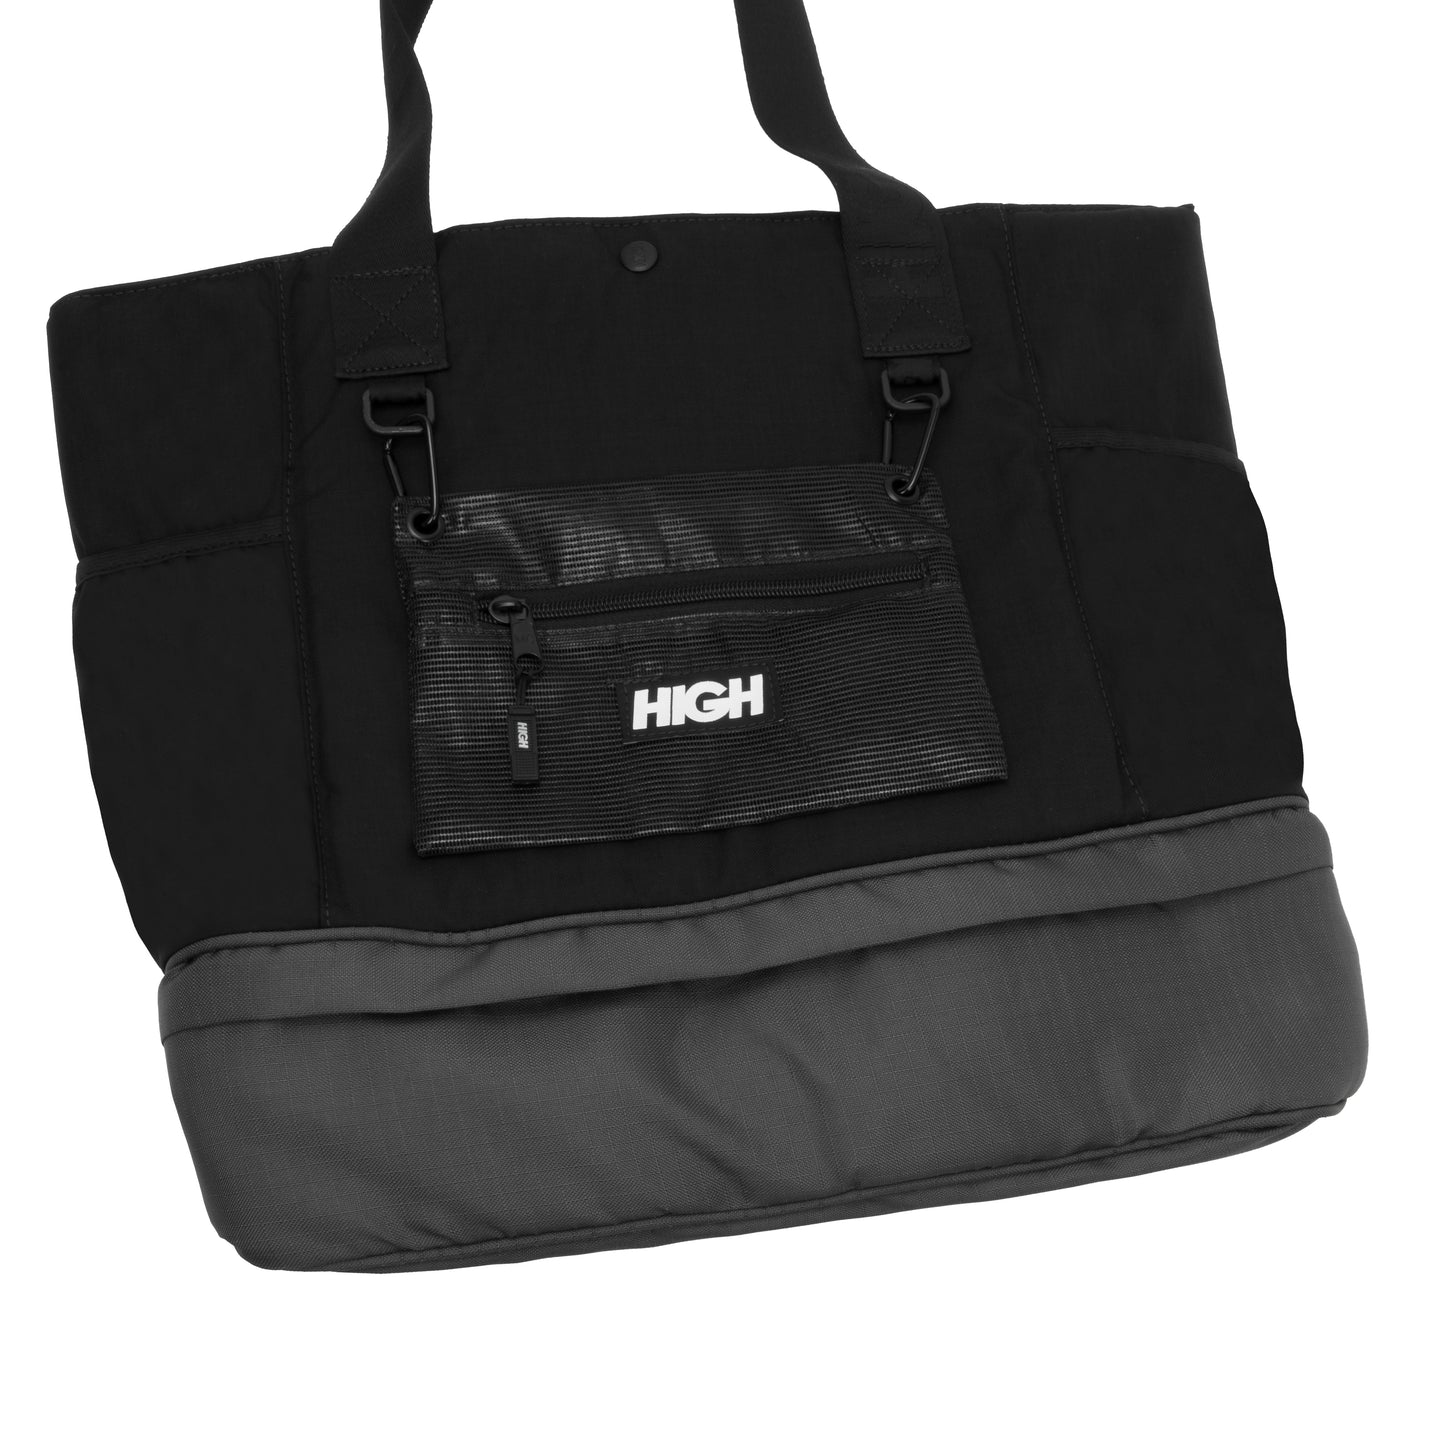 HIGH - Tote Bag Carrel Black